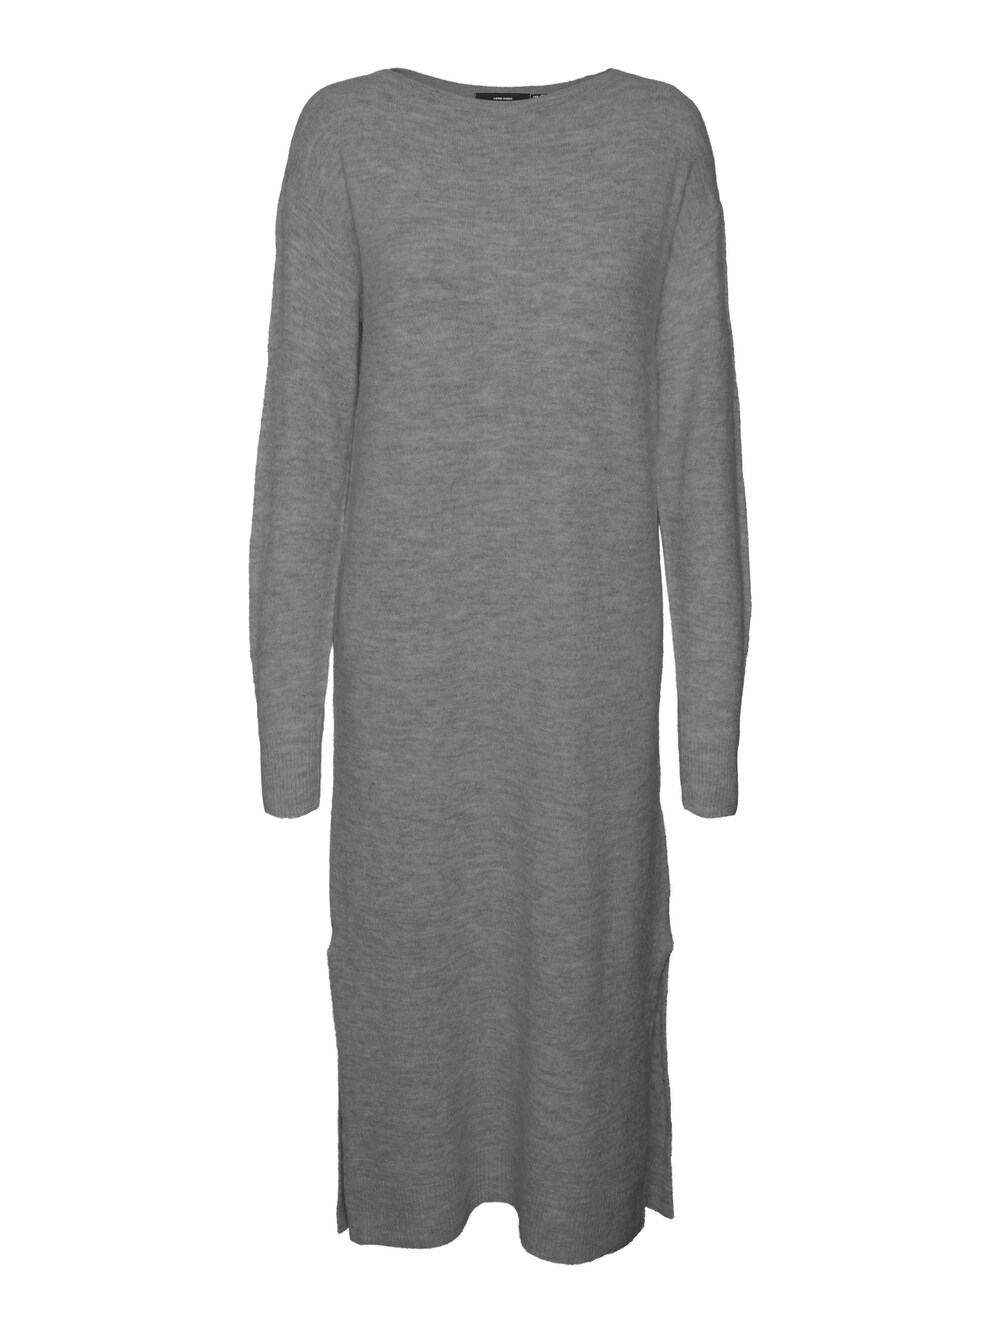 Вязанное платье Vero Moda LEFILE, пестрый серый платье миди vero moda lefile long sleeve бежевый